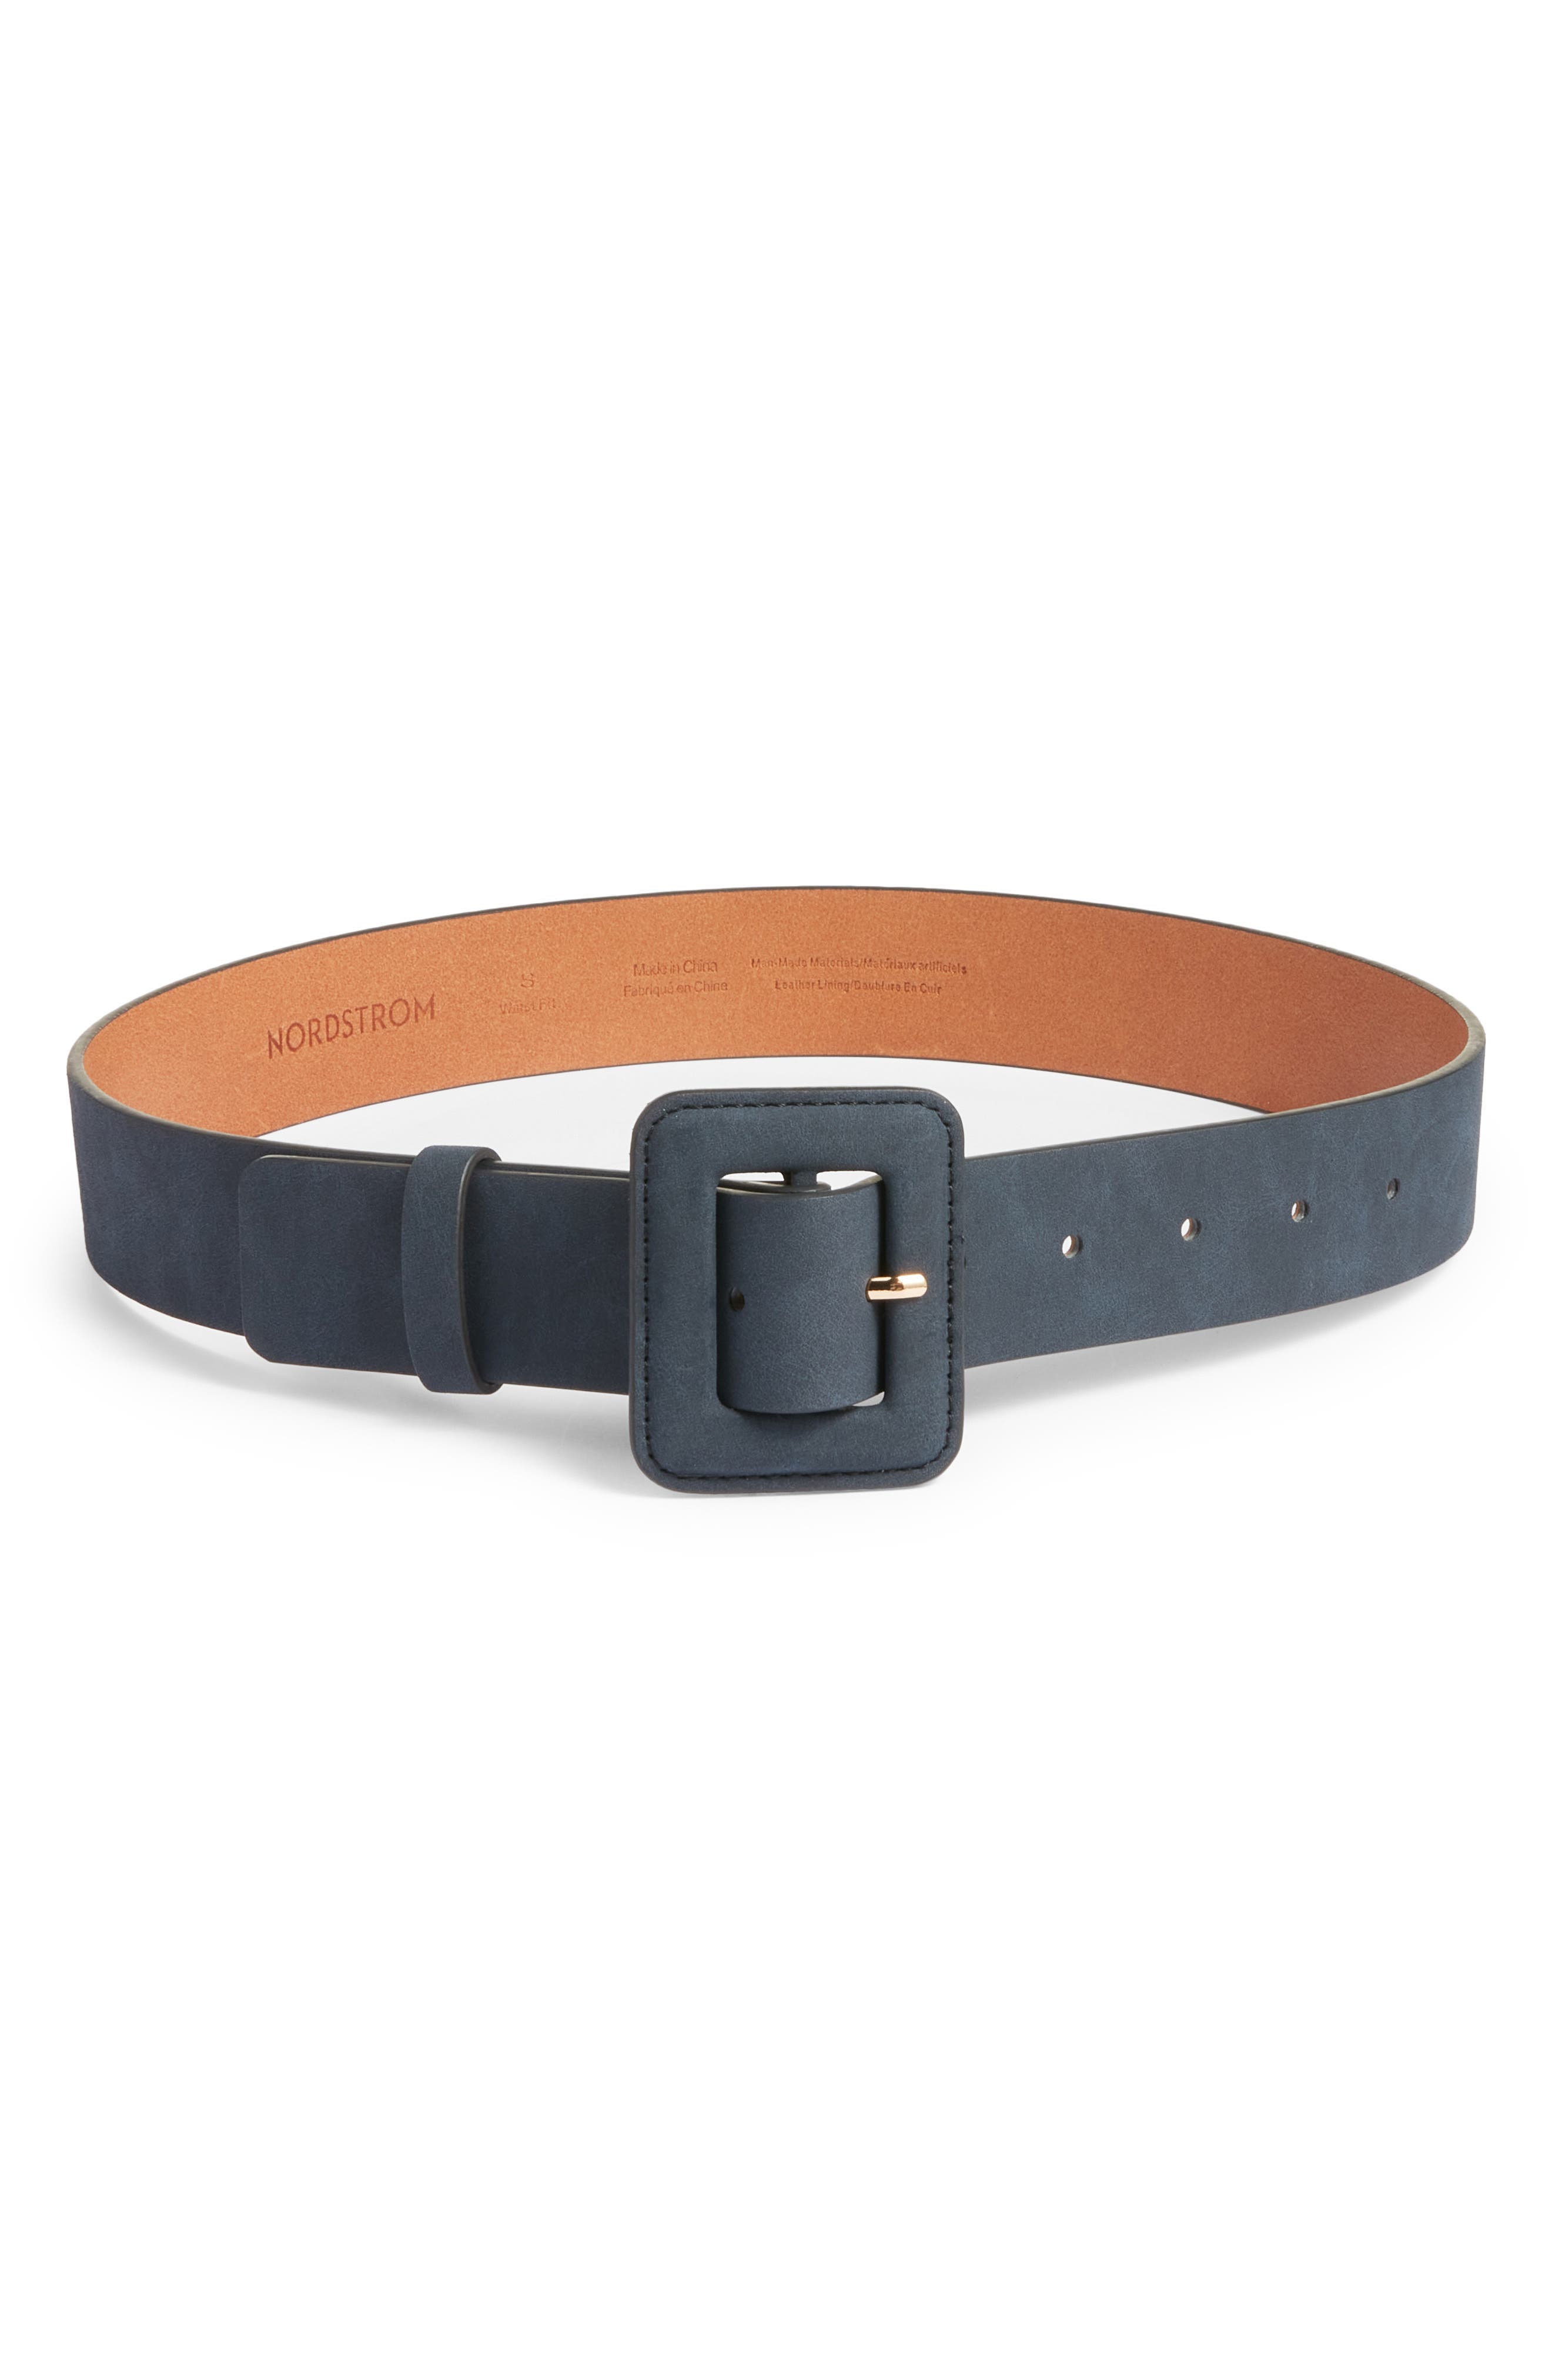 Accessories Belts Faux Leather Belts Faux Leather Belt light orange-brown animal pattern casual look 